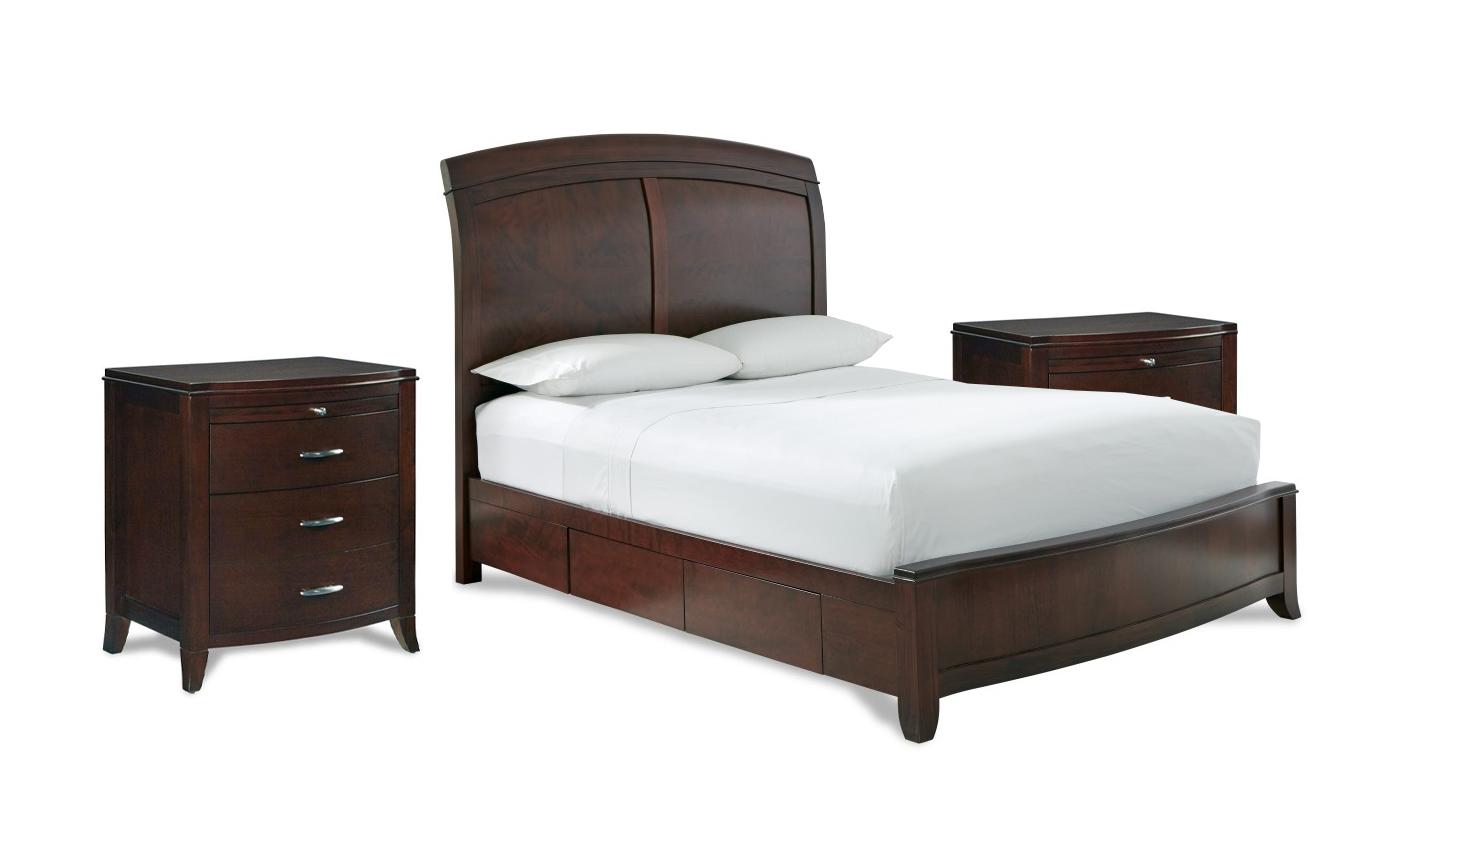 

    
Mahogany Finish Storage King Bedroom Set 5Pcs w/Chest BRIGHTON by Modus Furniture
